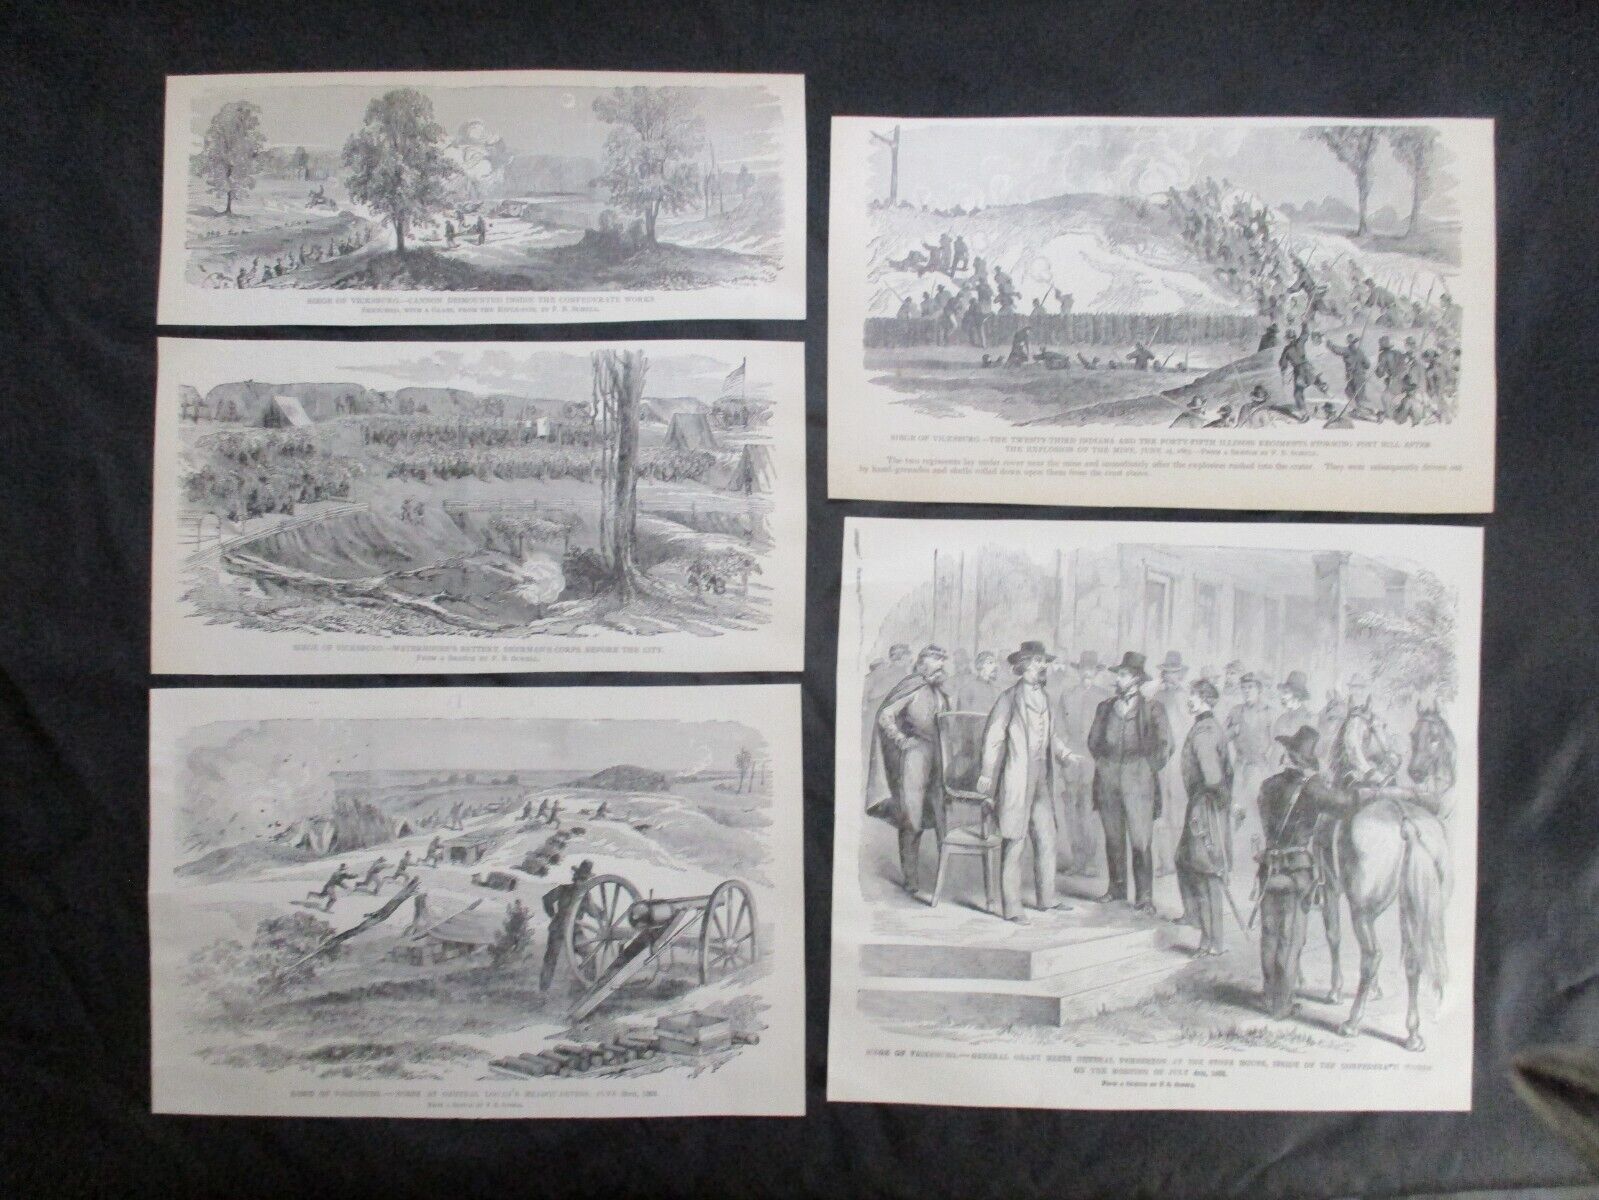 5 1885 Civil War Prints - Various Scenes of Vicksburg, Mississippi Siege, 1863